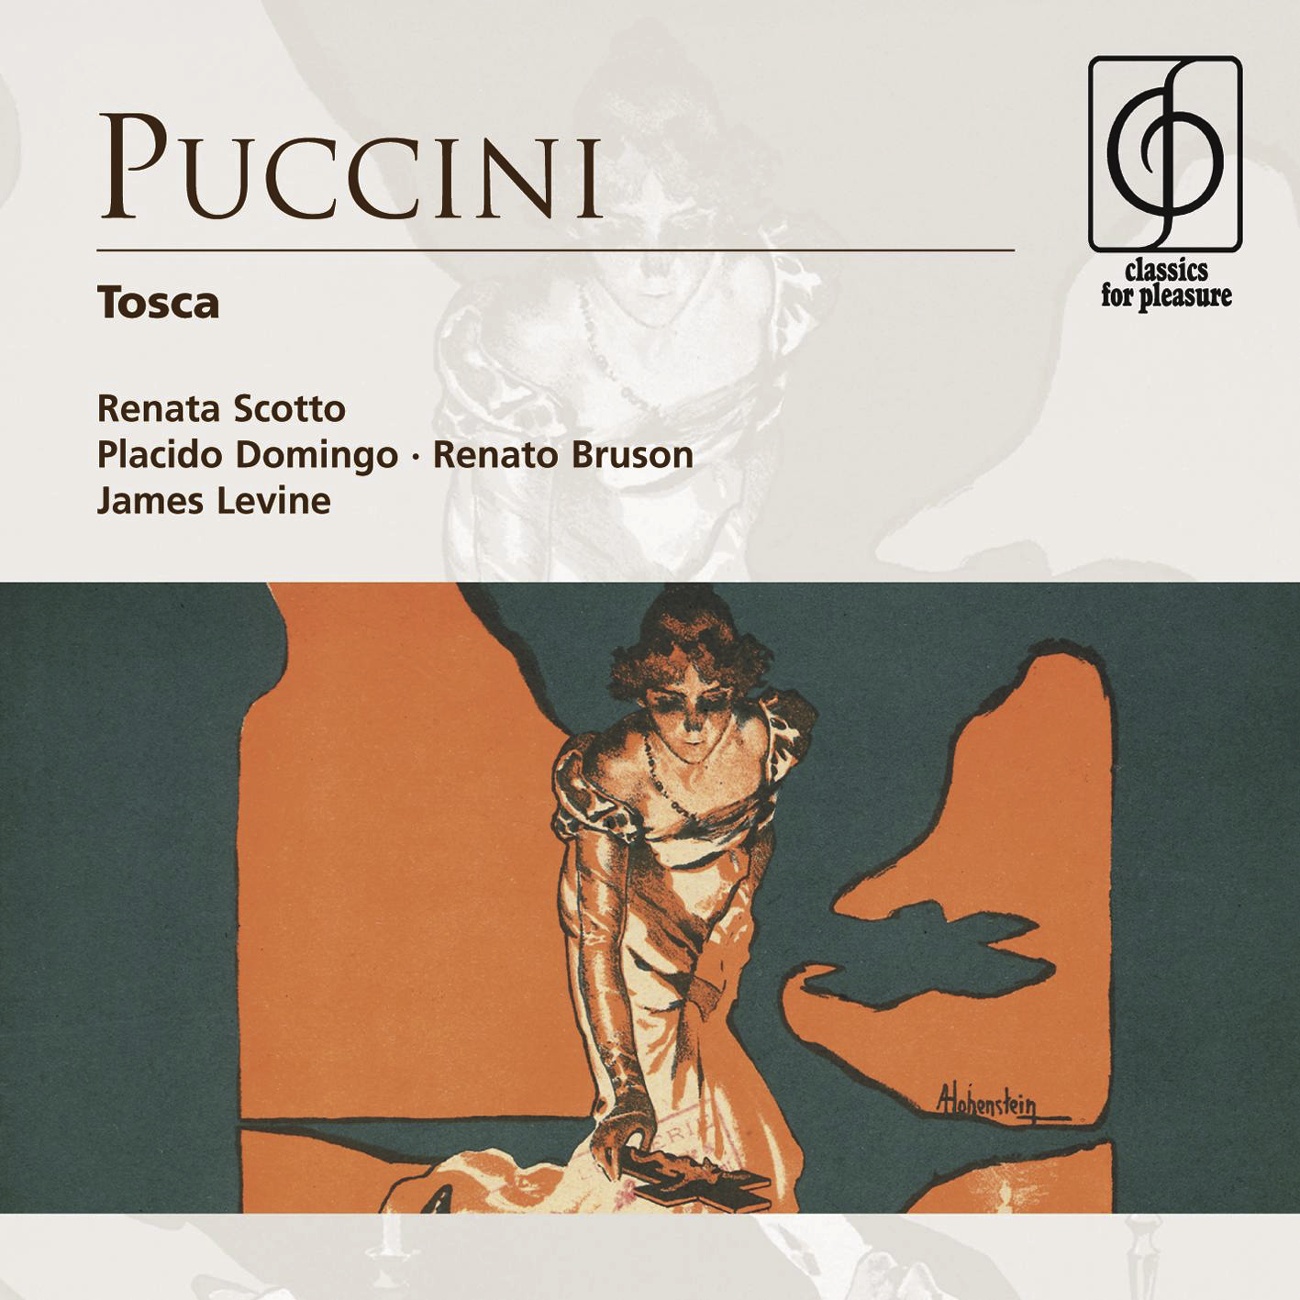 Tosca - Opera in three acts (1997 Digital Remaster), Act I: Ah!  Finalmente! (Angelotti, Sacristan, Cavaradossi)